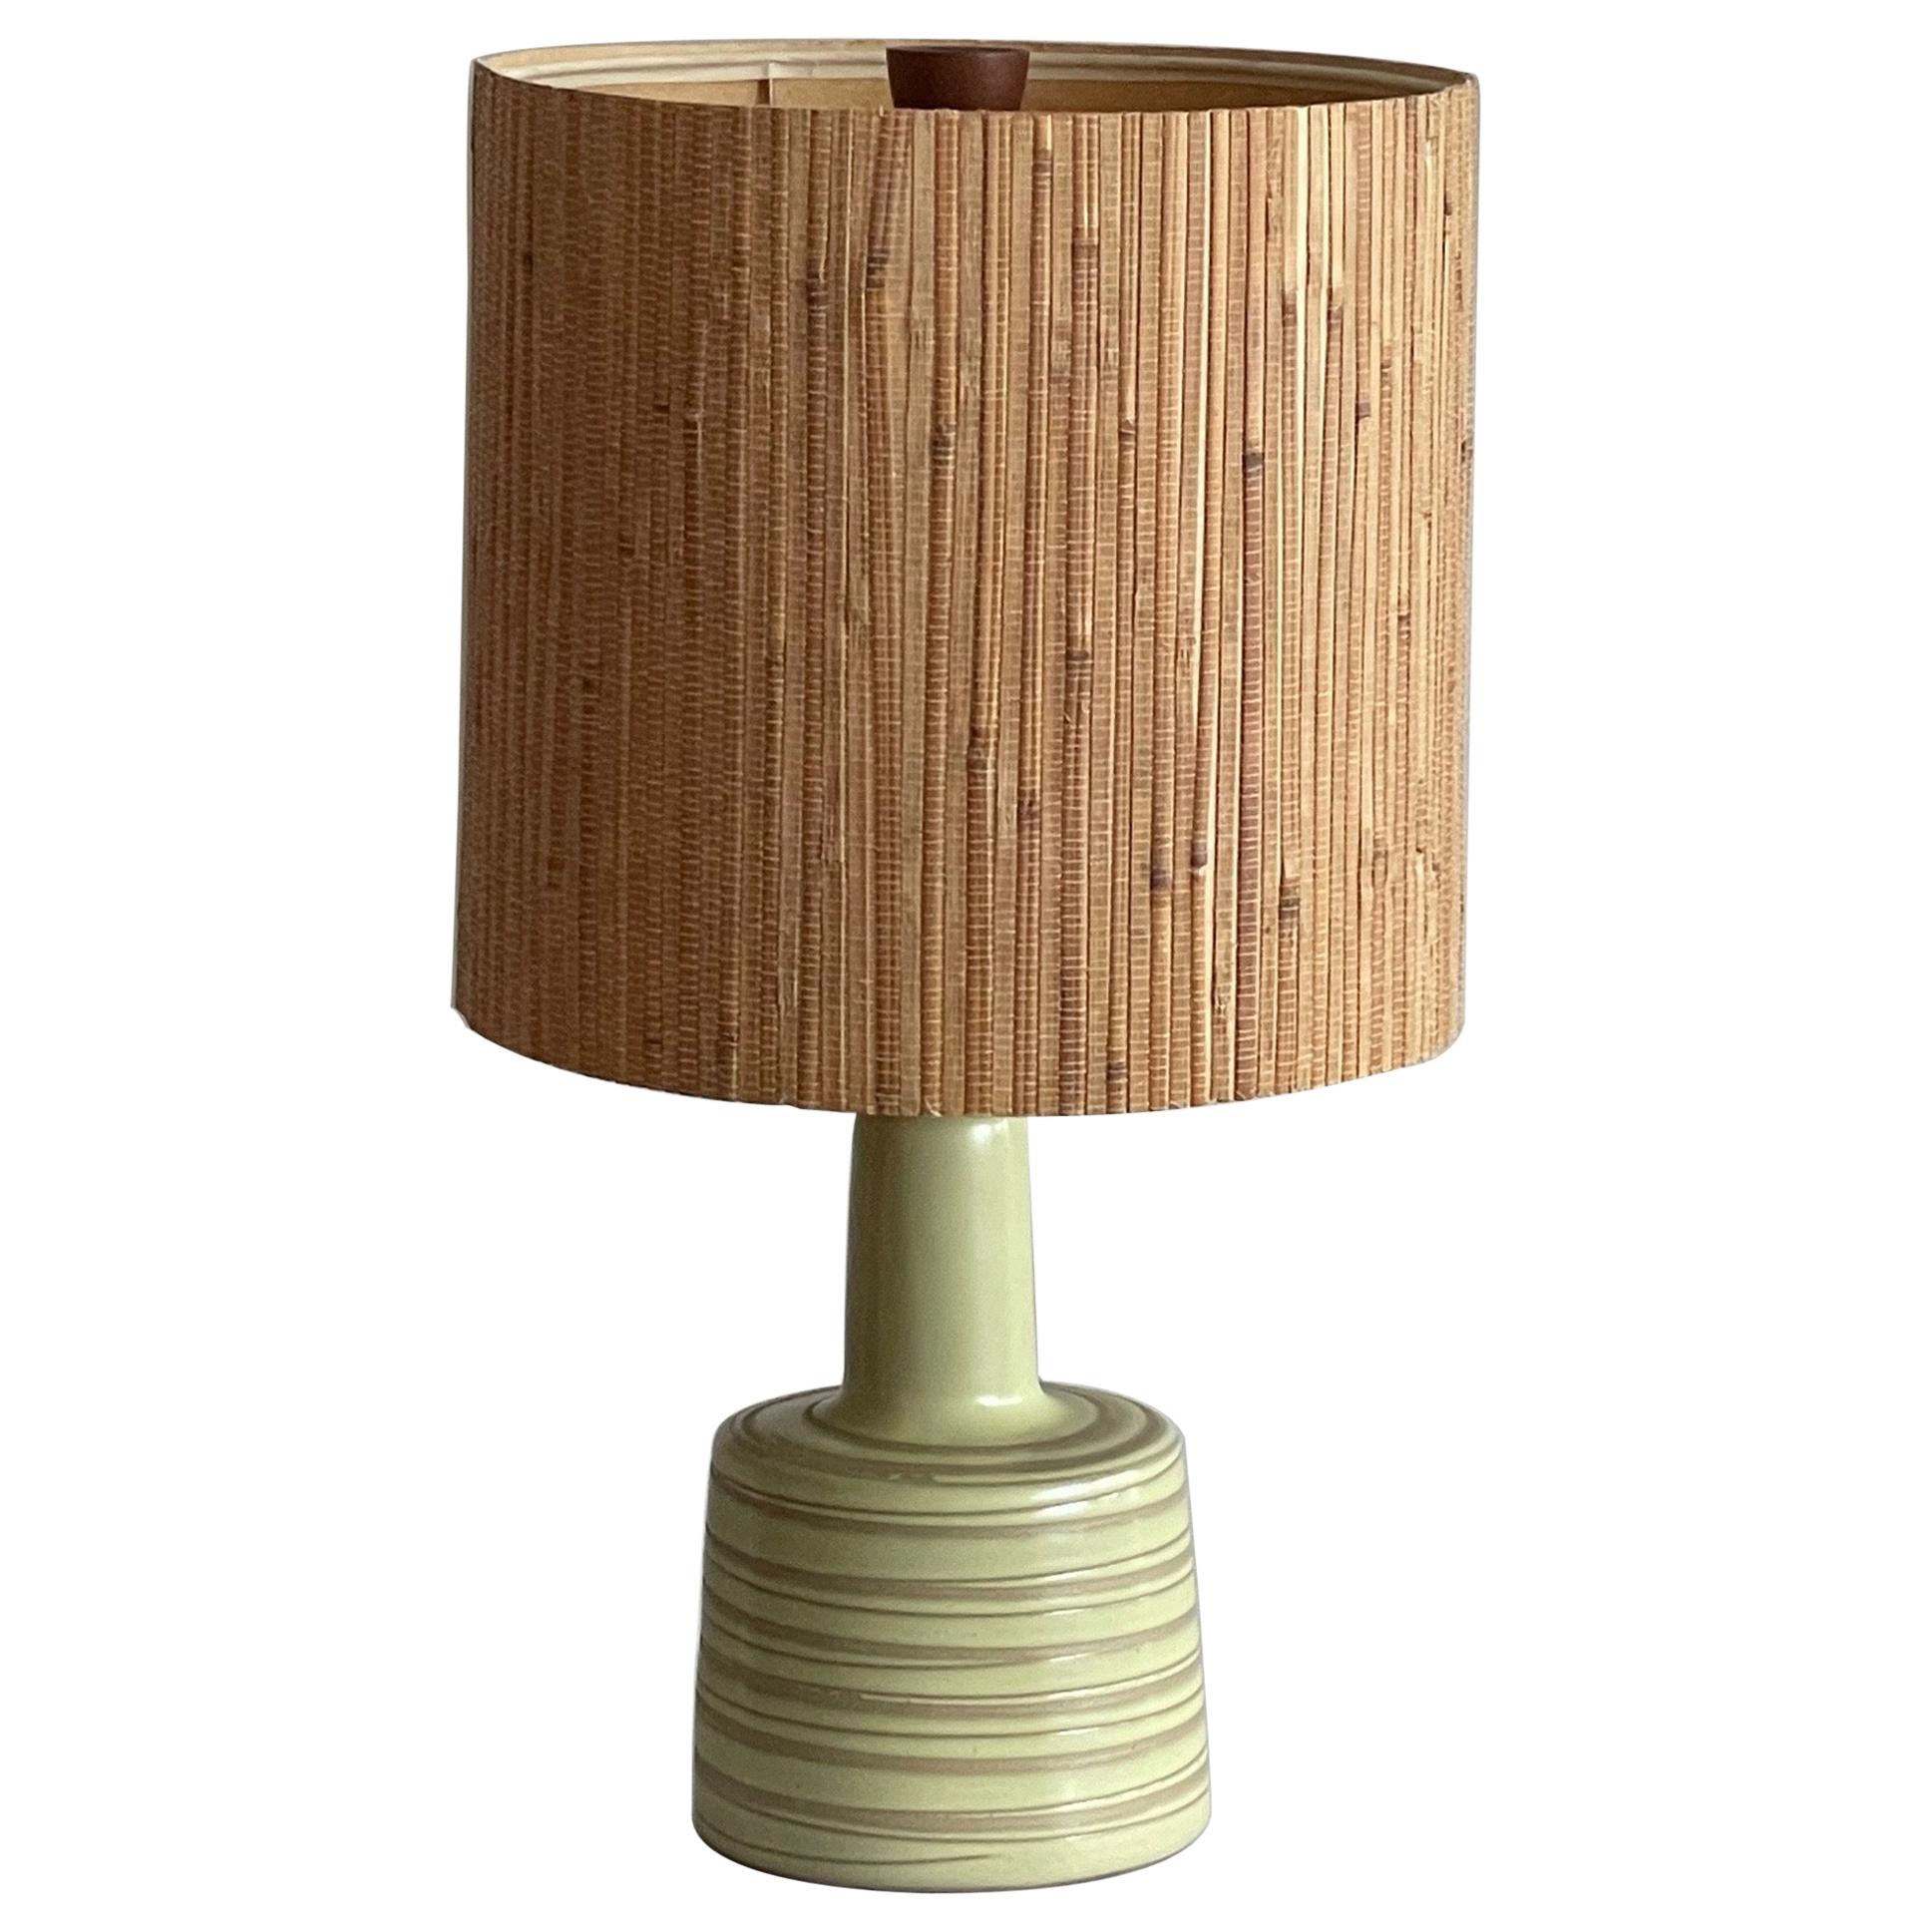 Charming Ceramic Lamp by Martz